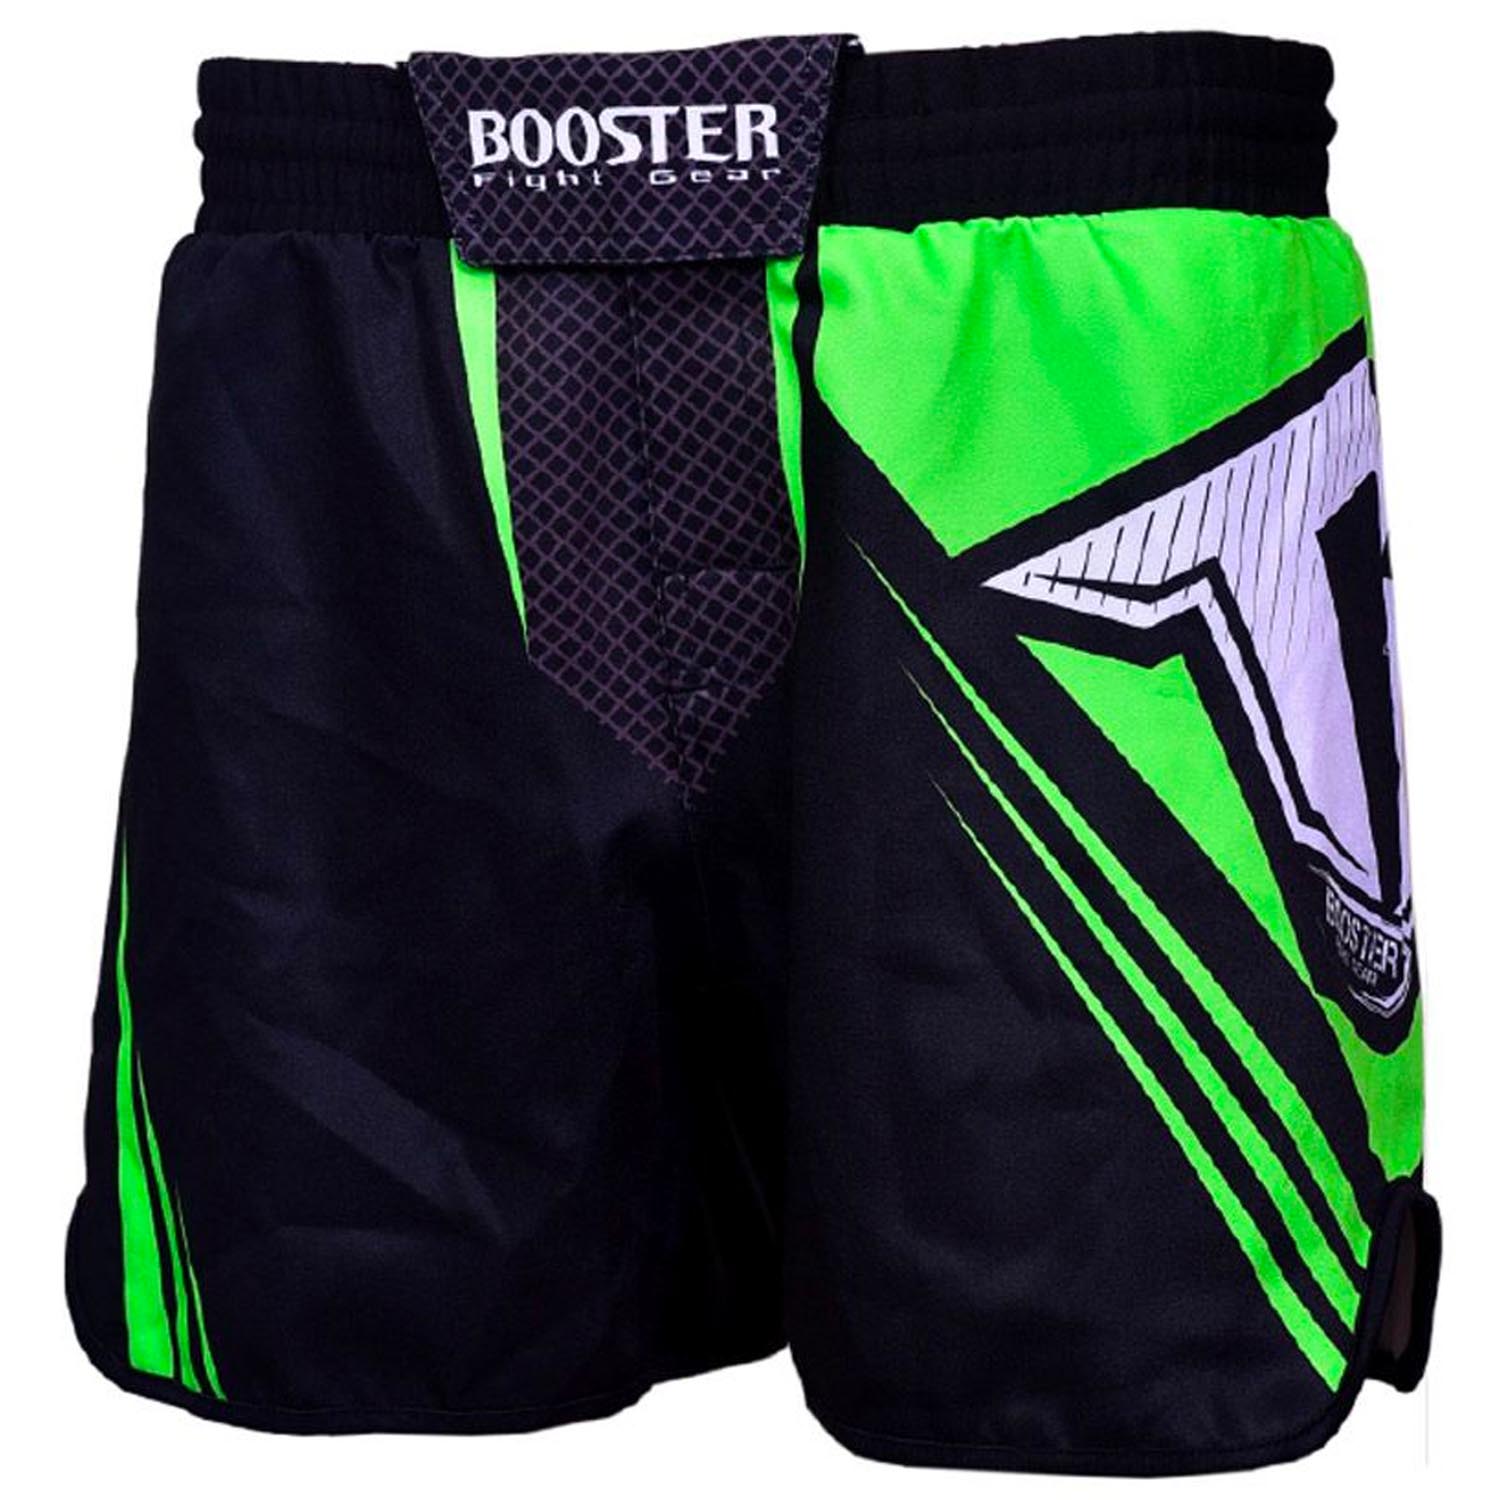 Booster MMA Fight Shorts, Xplosion 3, schwarz-grün, M